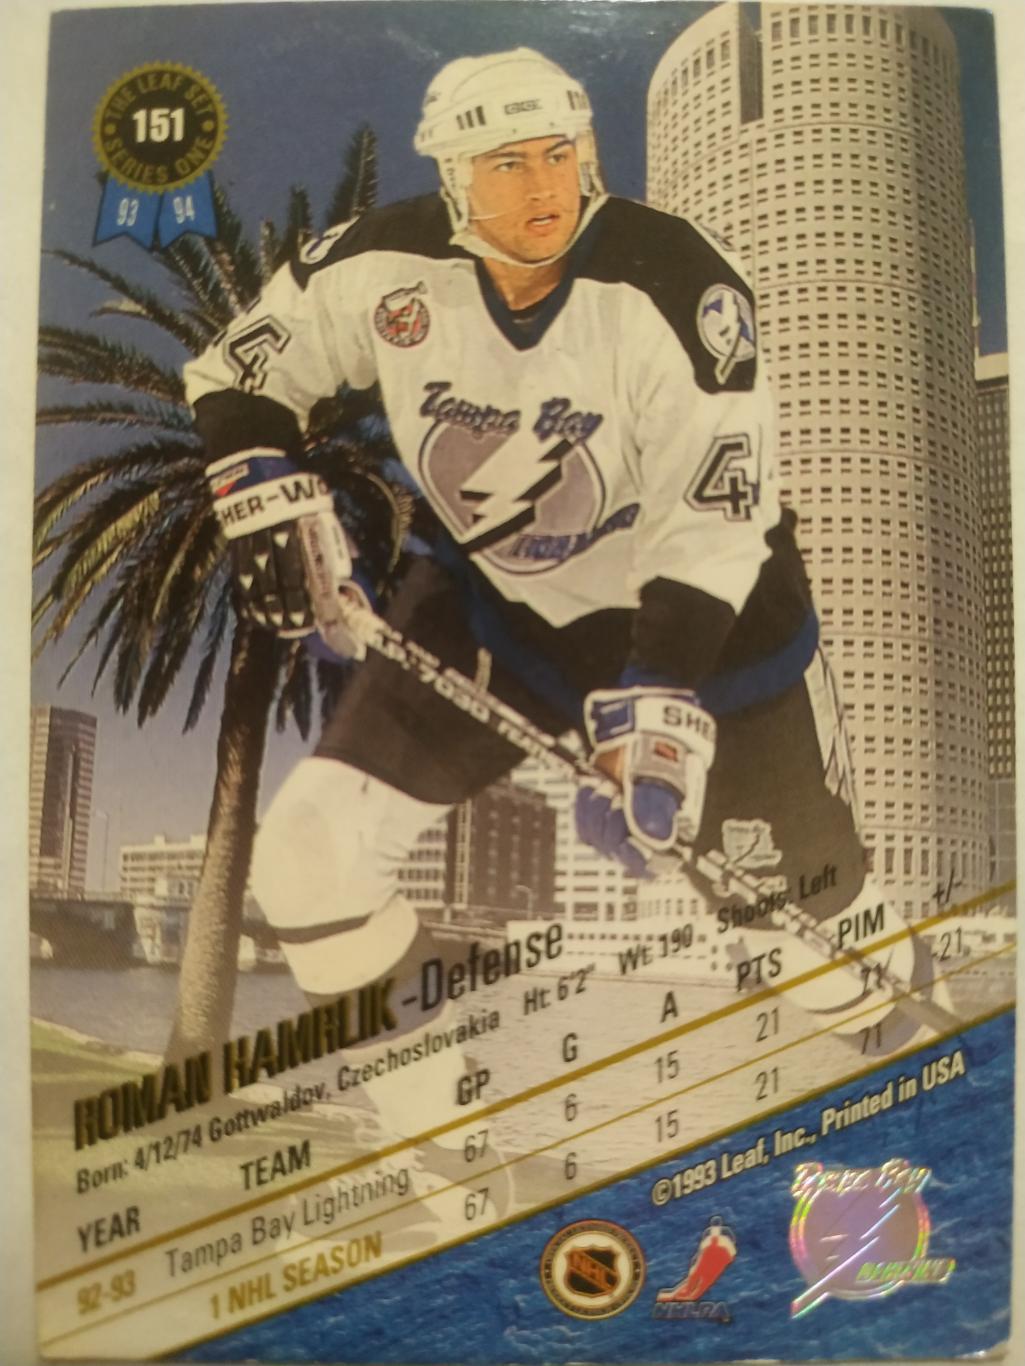 ХОККЕЙ КАРТОЧКА НХЛ LEAF SET SERIES ONE 1993-94 ROMAN HAMRLIK LIGHTNING #151 1